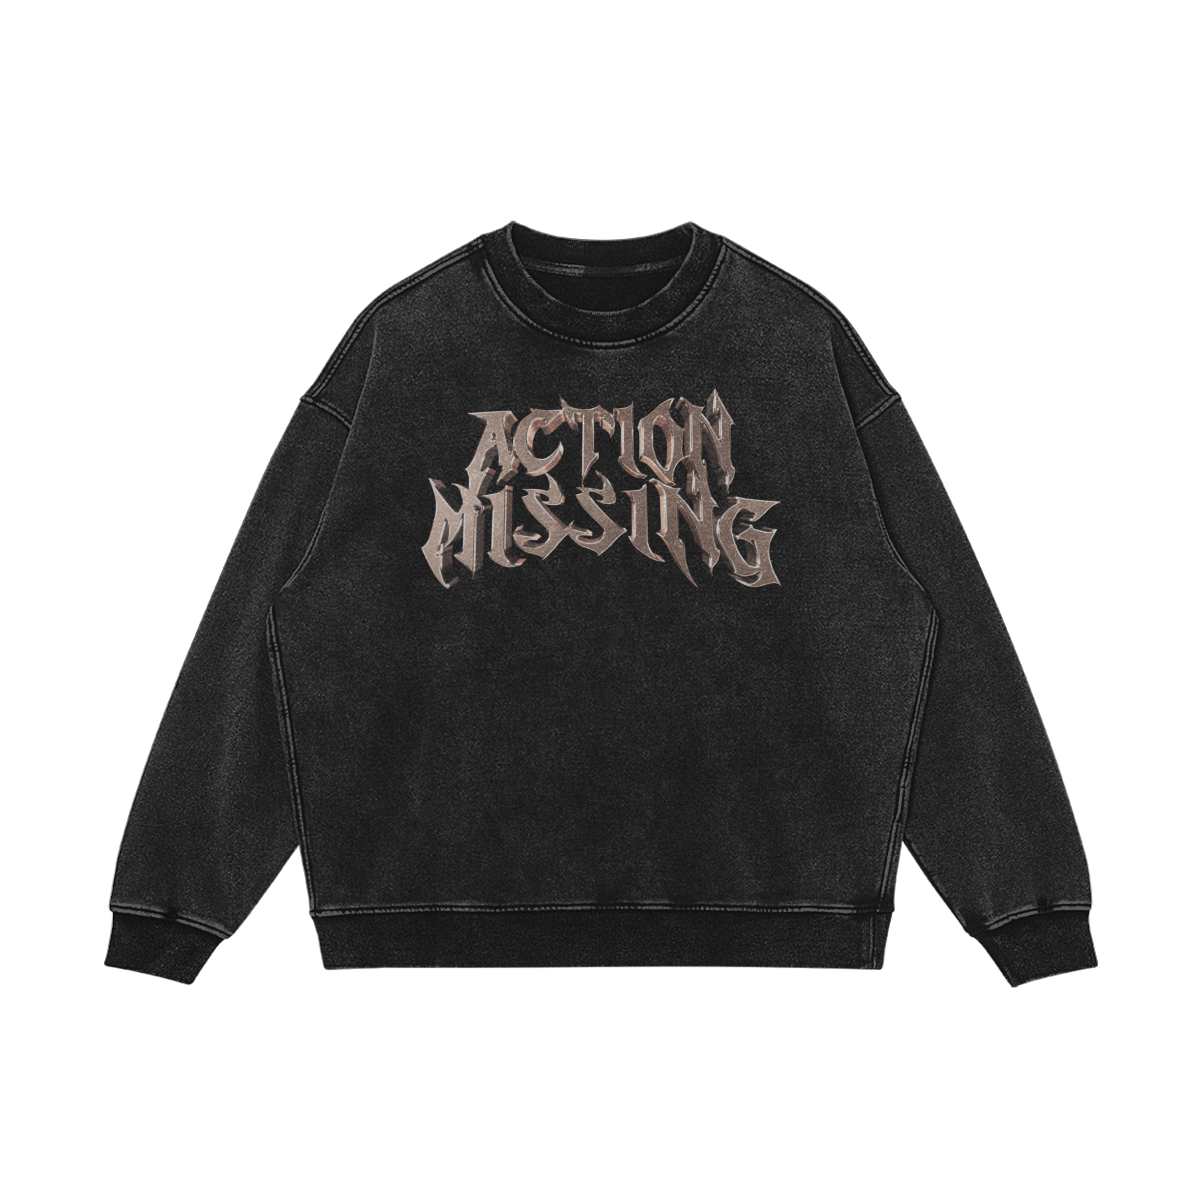 Action Missing | Sweatshirt